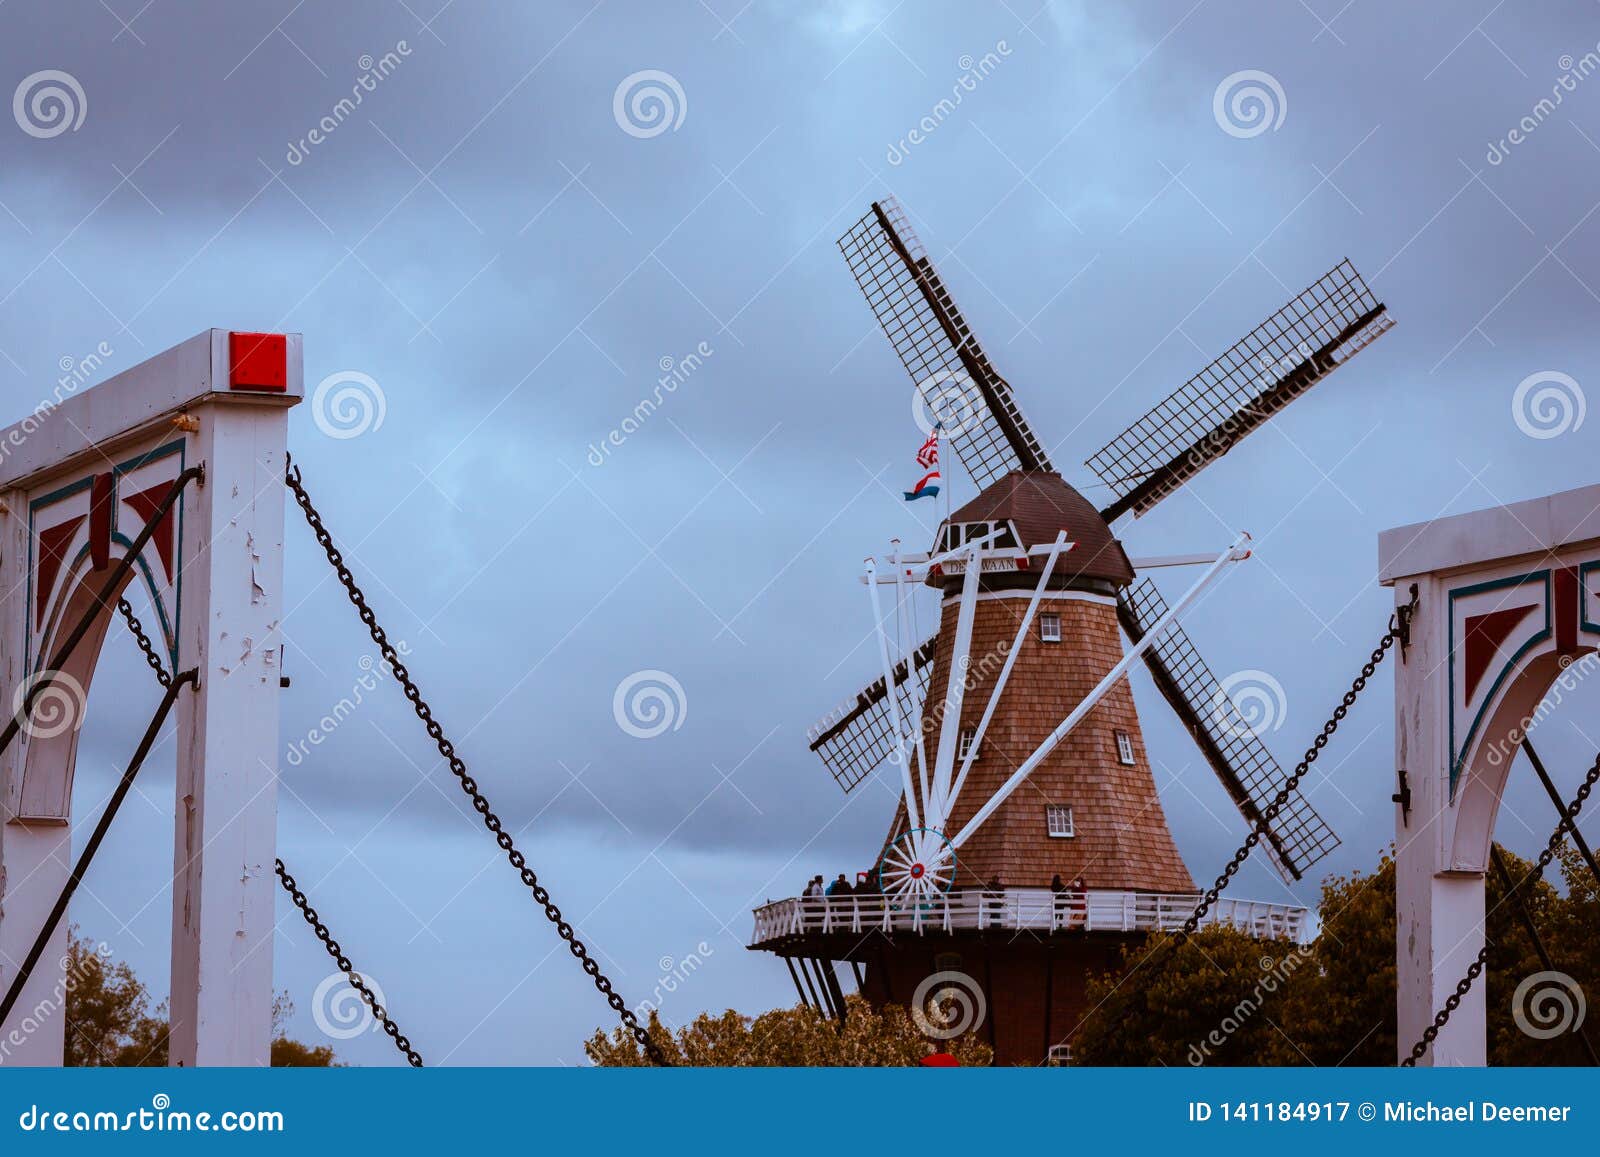 De Zwaan Windmill in Holland Michigan Framed by the Bridge on a Cloudy ...